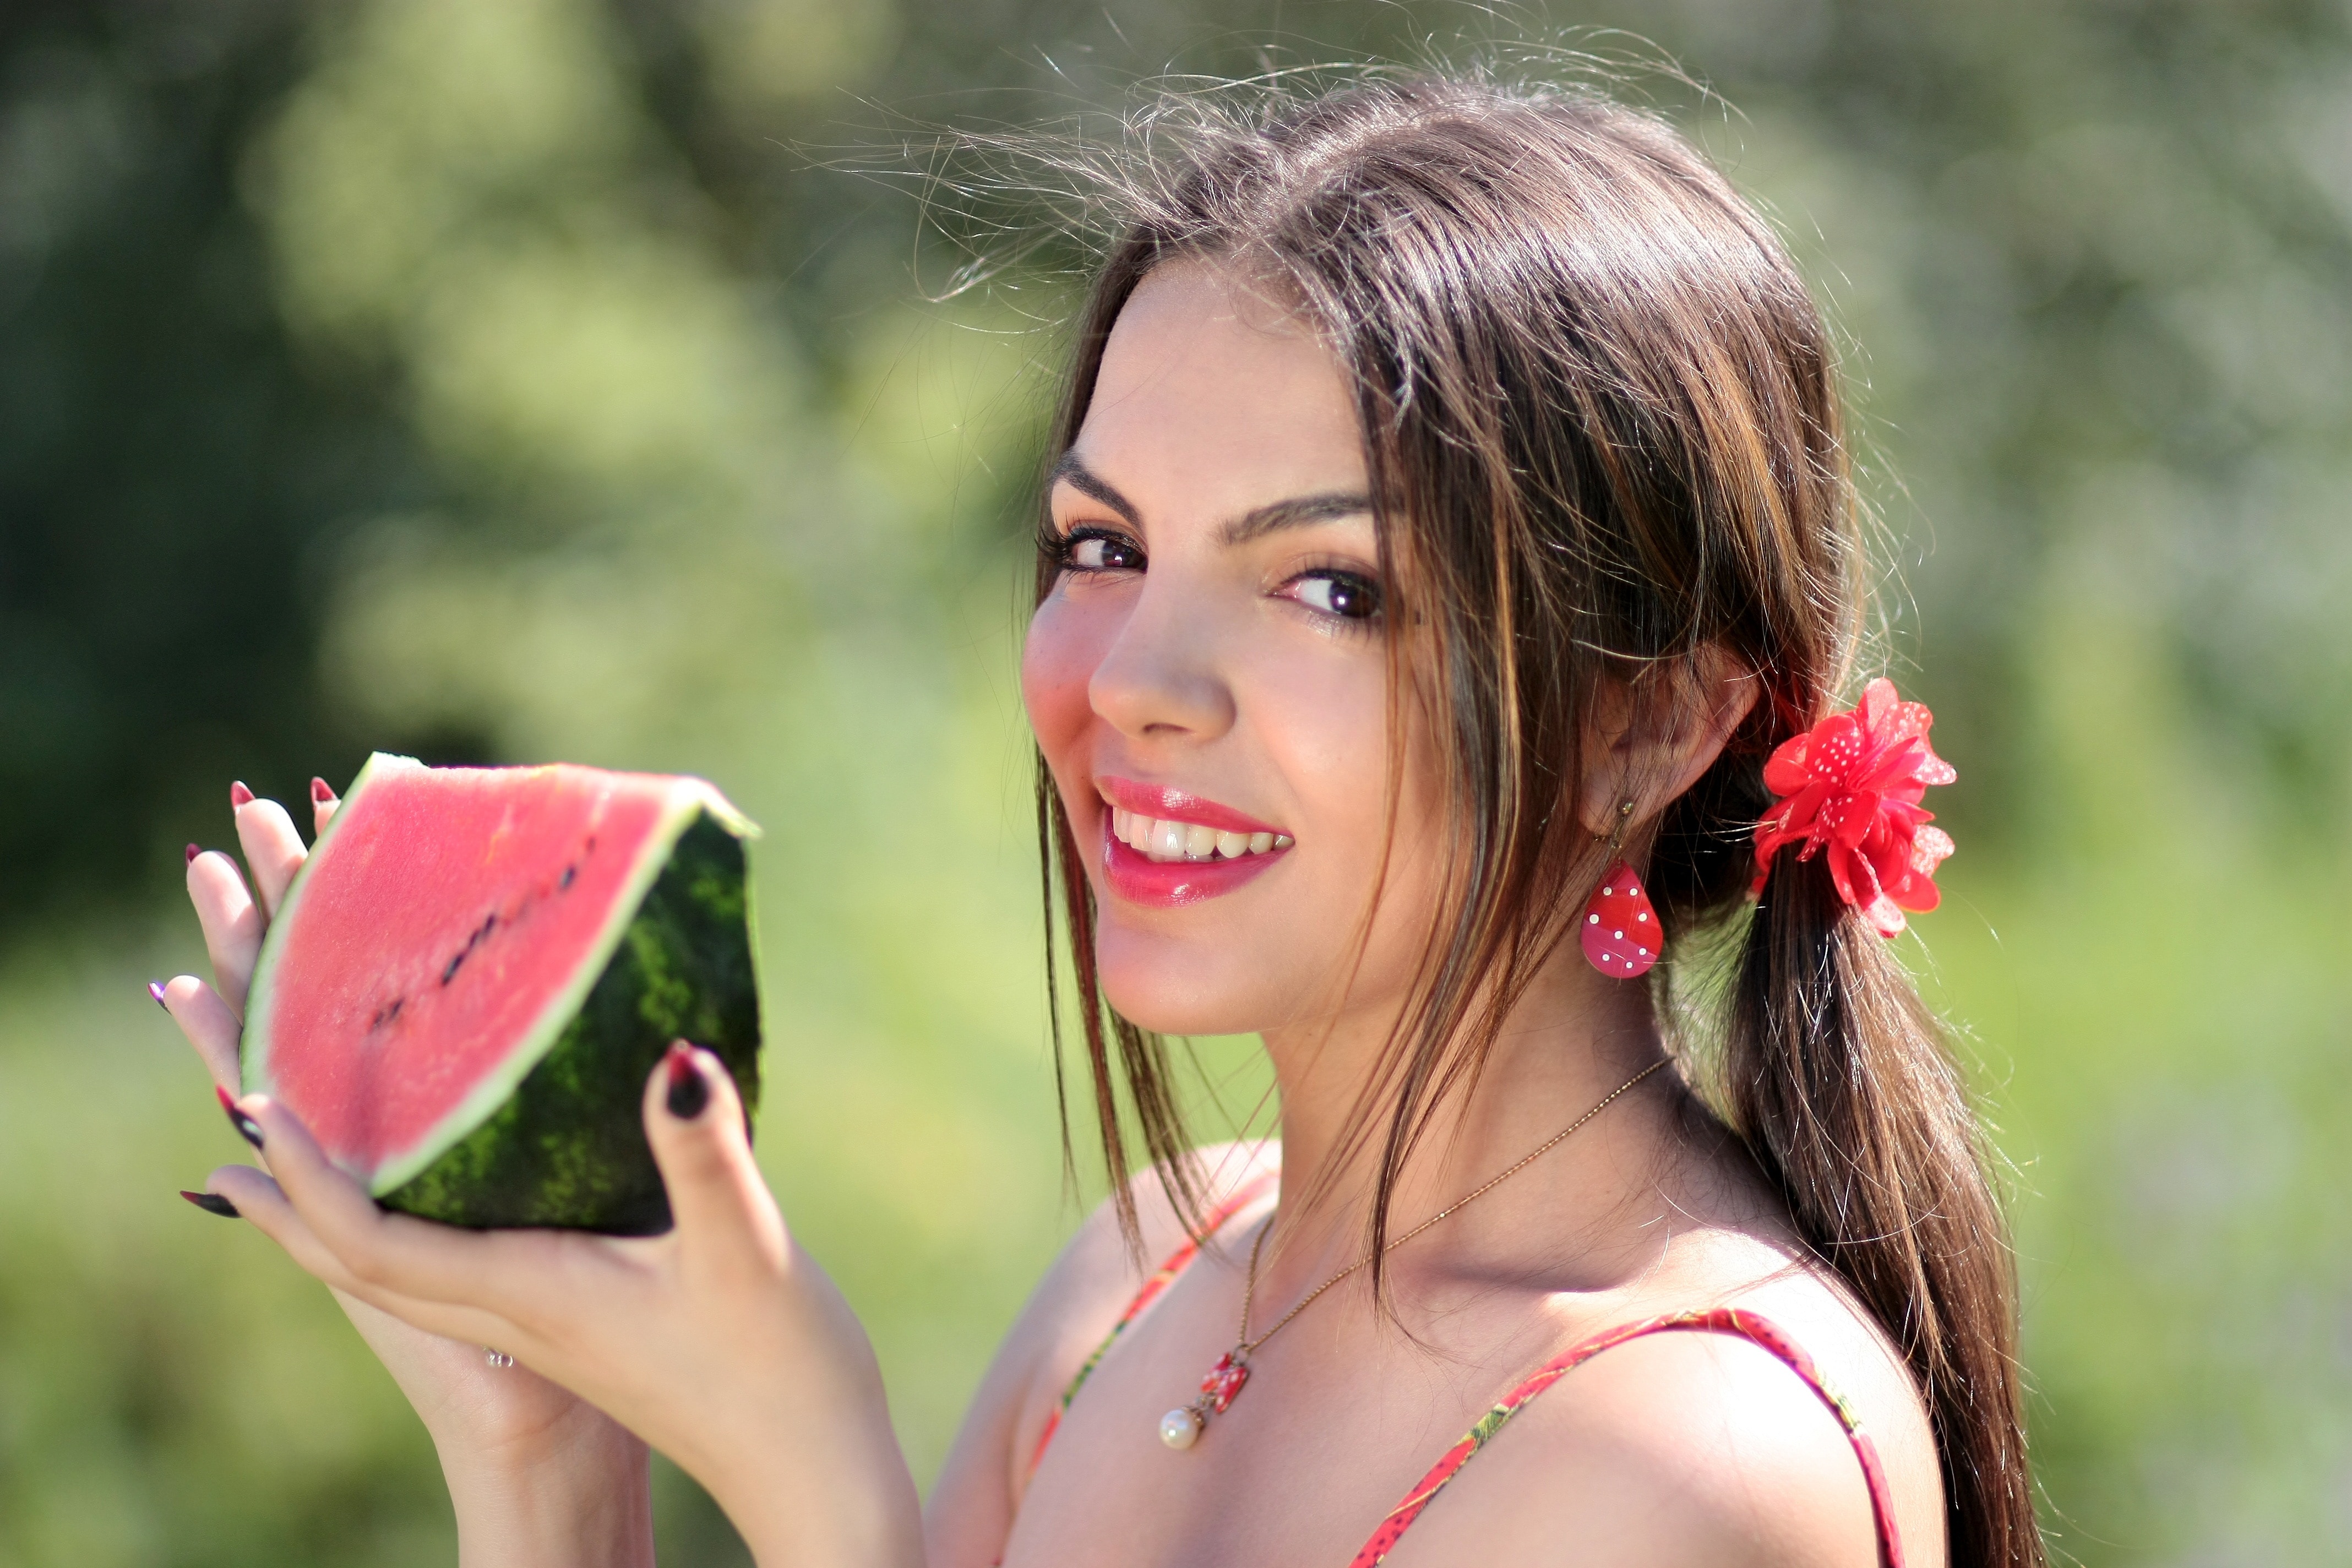 Customize wallpaper resolution. tilt shift photo of woman holding slice of watermelon...